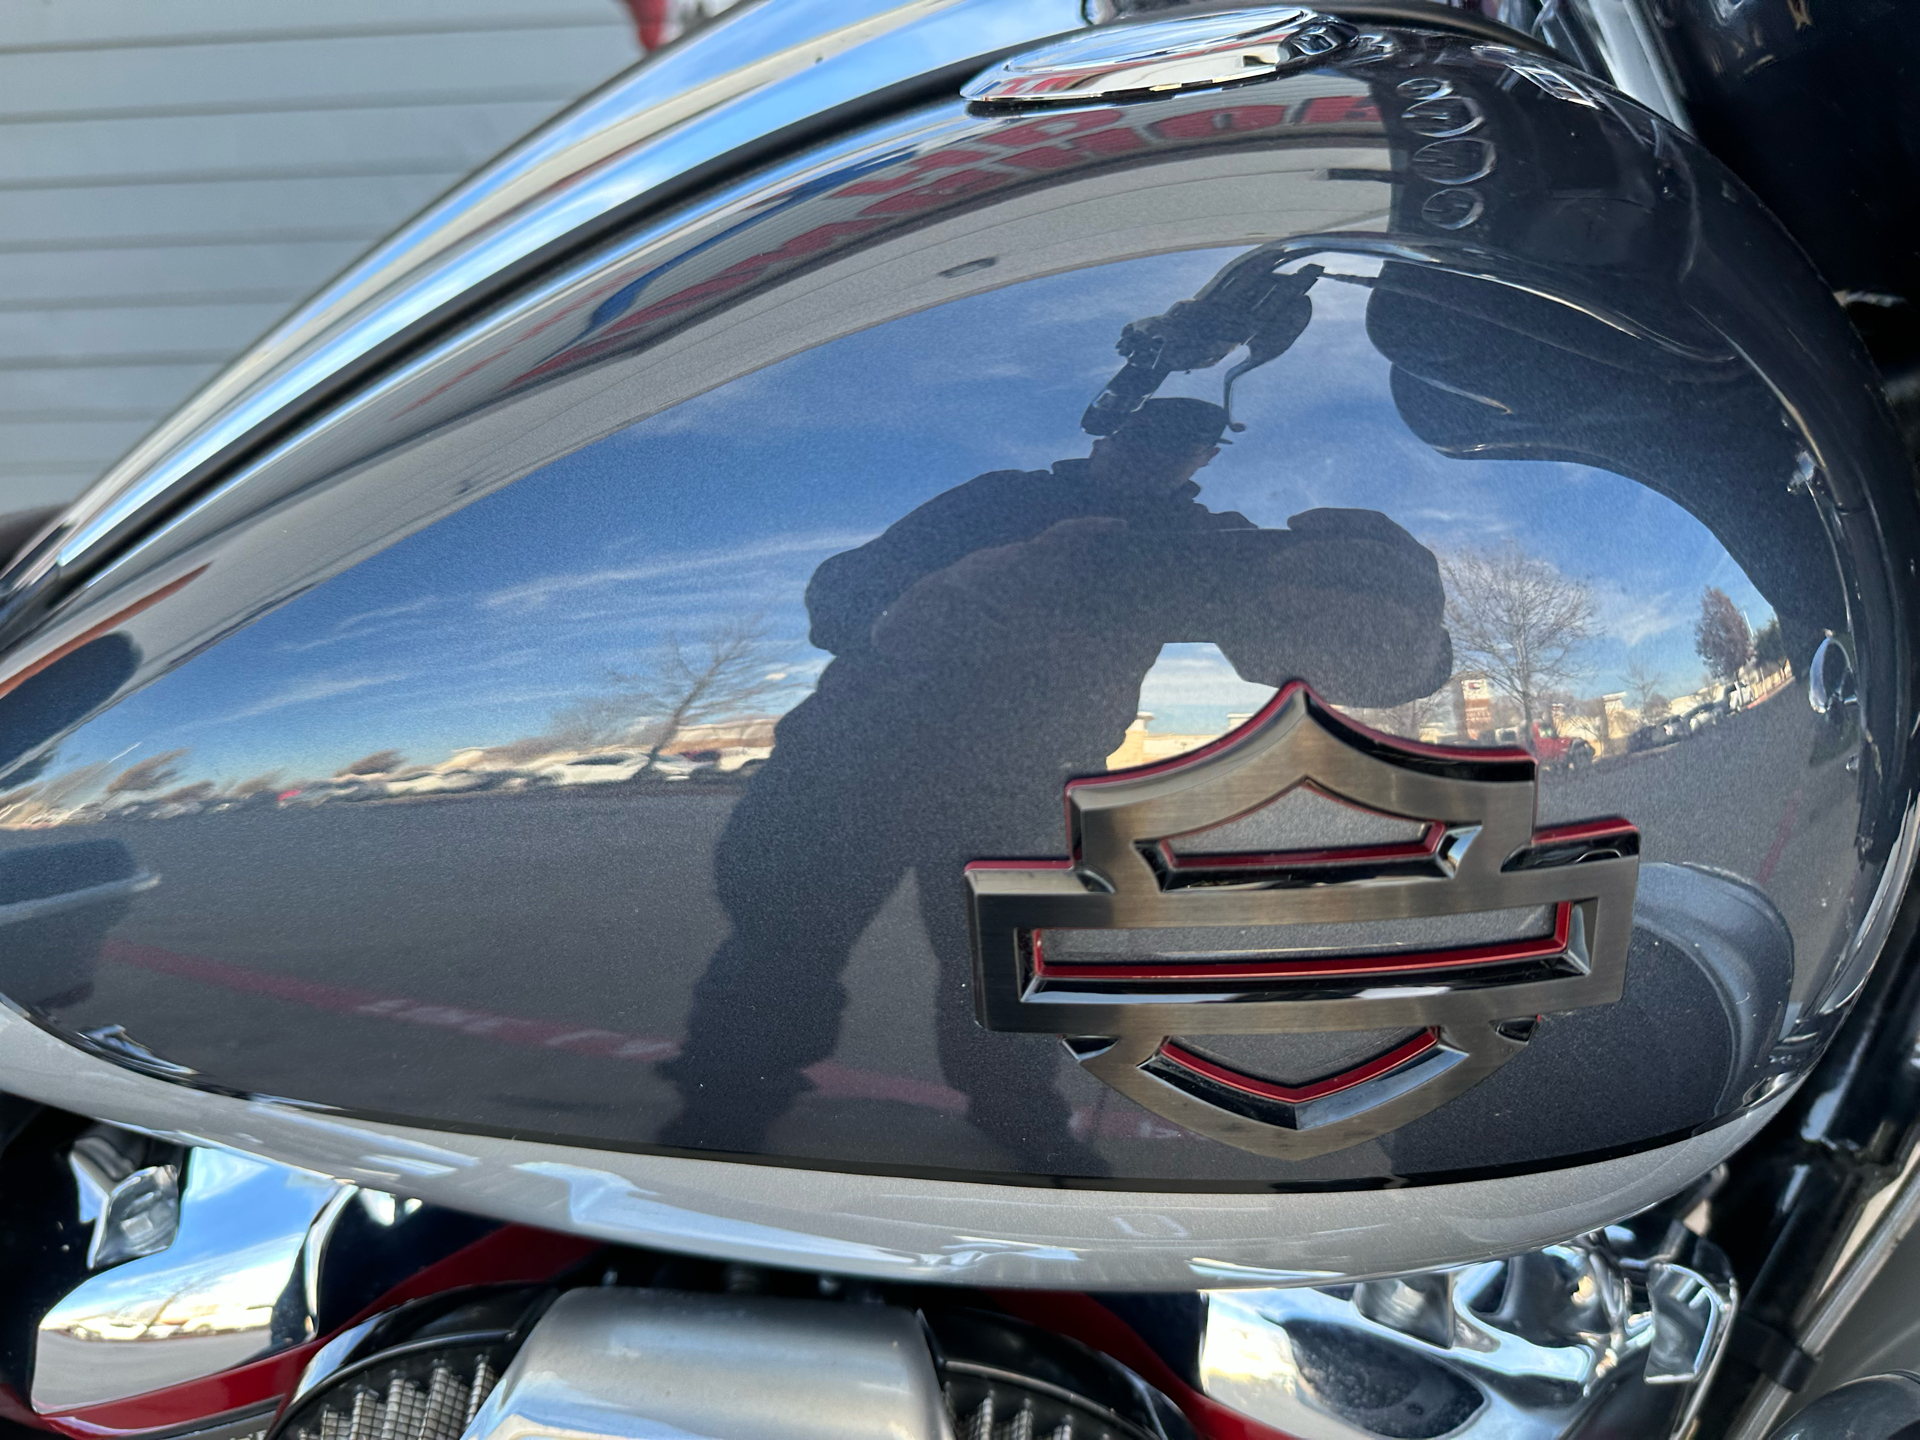 2019 Harley-Davidson CVO™ Street Glide® in Grand Prairie, Texas - Photo 6